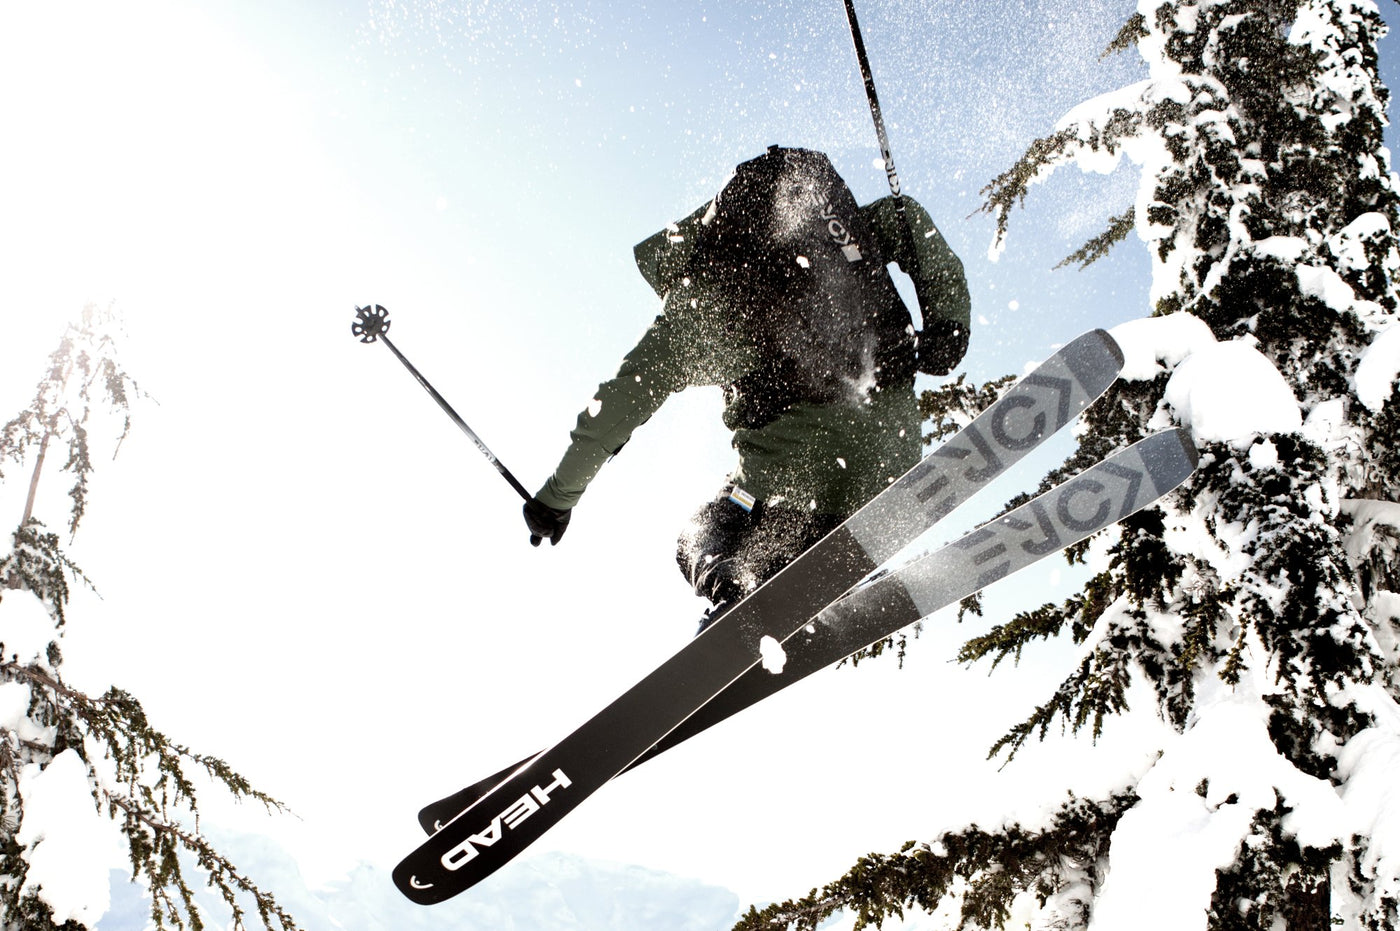 Power Ski - Mann springt auf Freeride Ski über Kamera